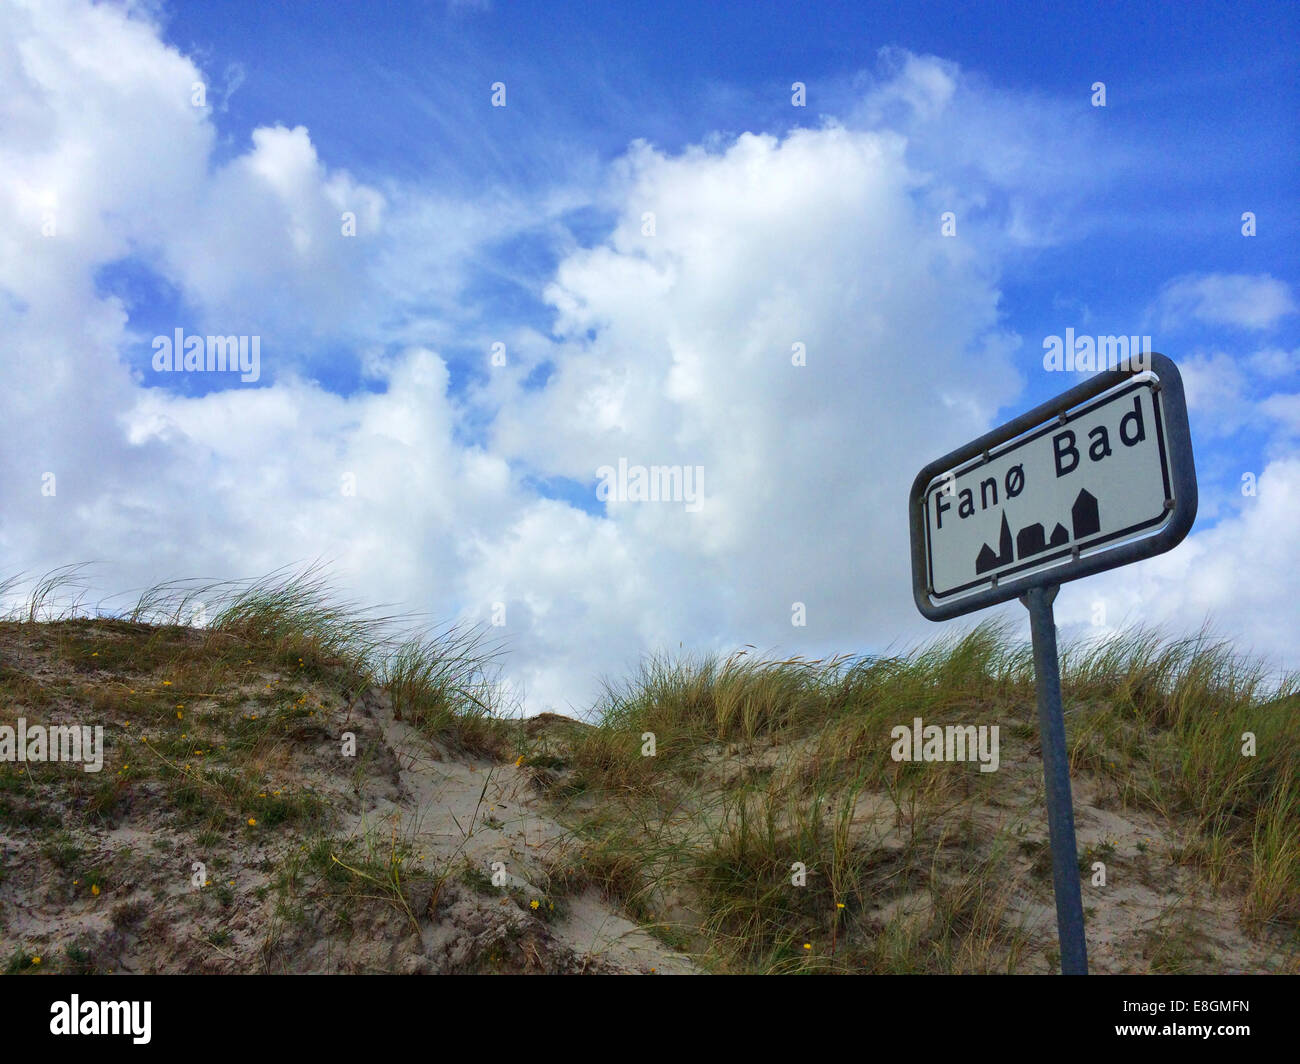 Cartello stradale, Fanoe Bad, Fanoe Jutland, Danimarca Foto Stock